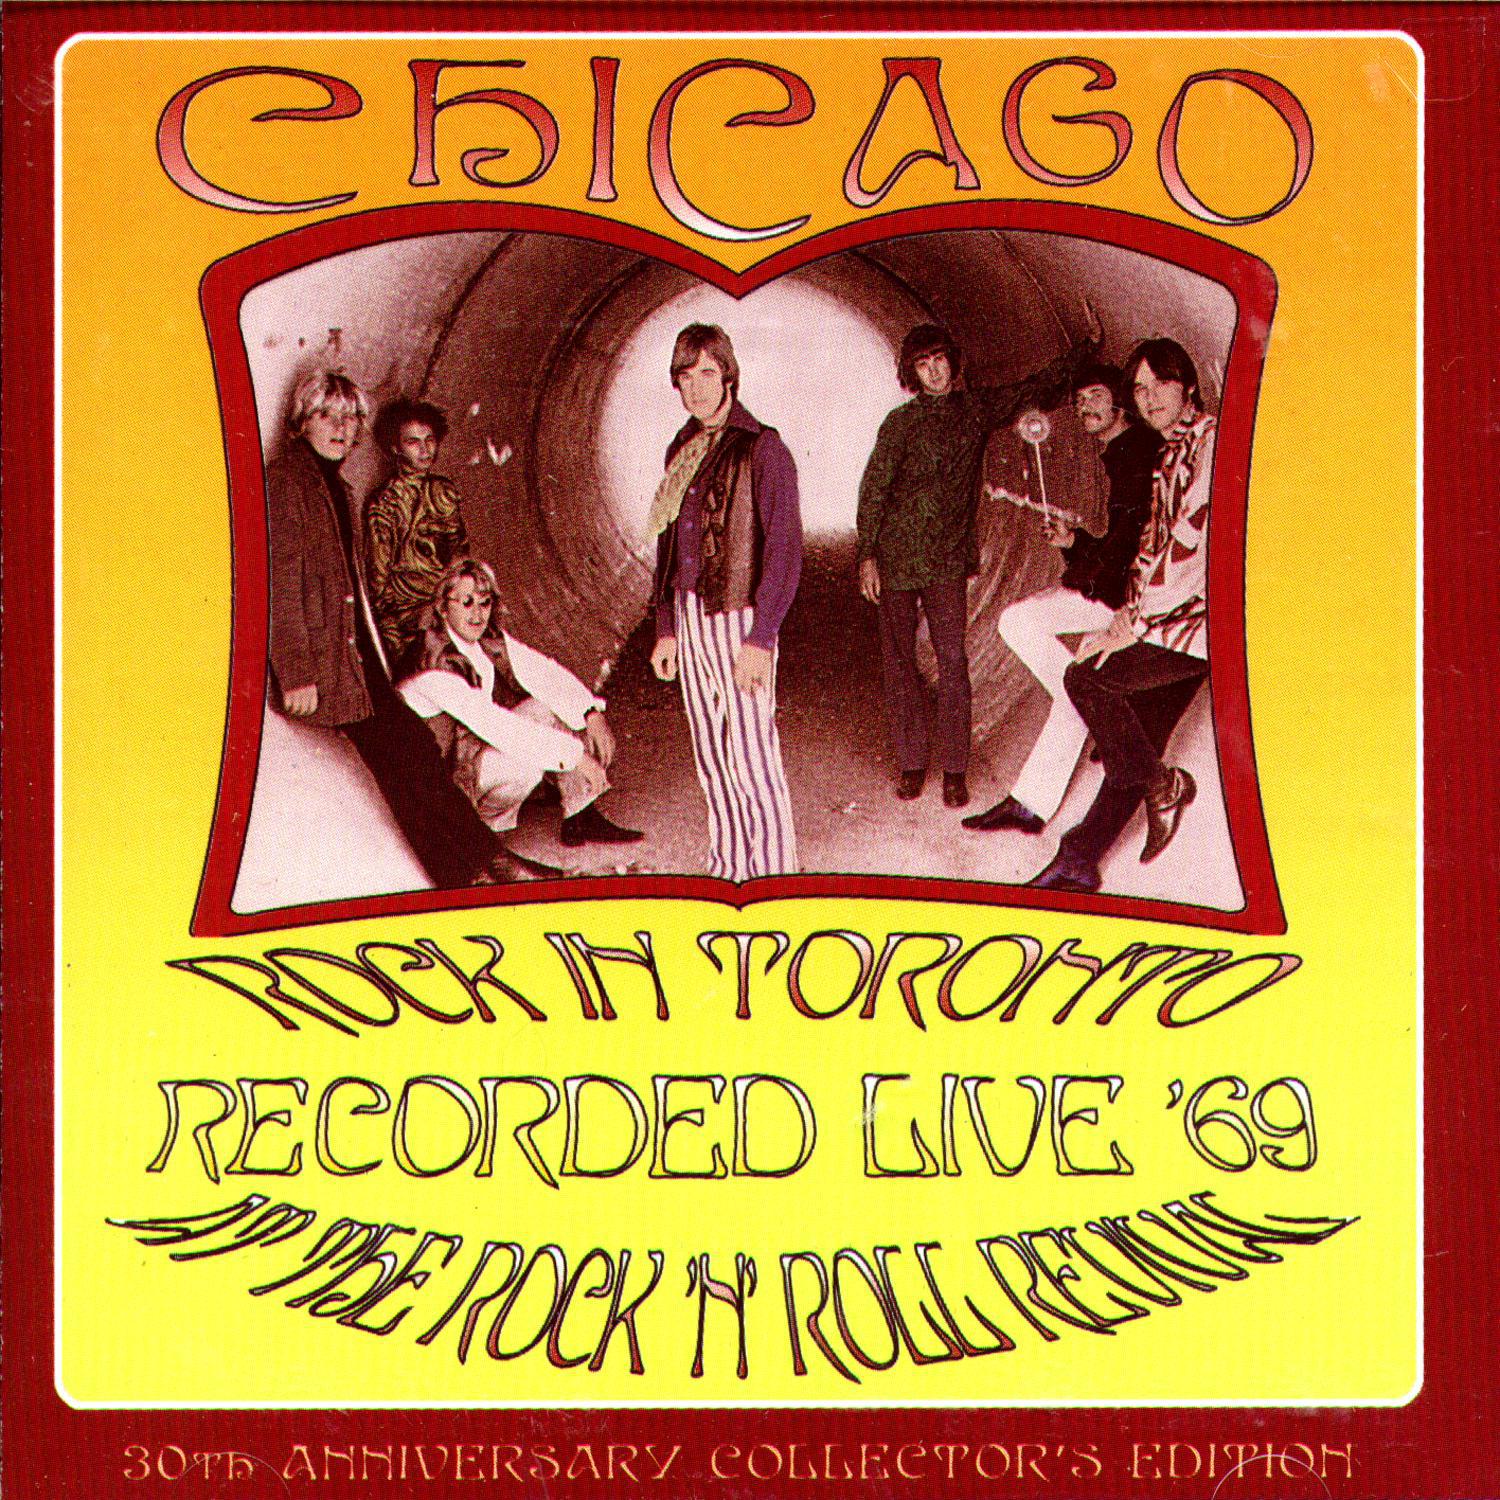 Rock in Toronto: Recorded Live '69专辑